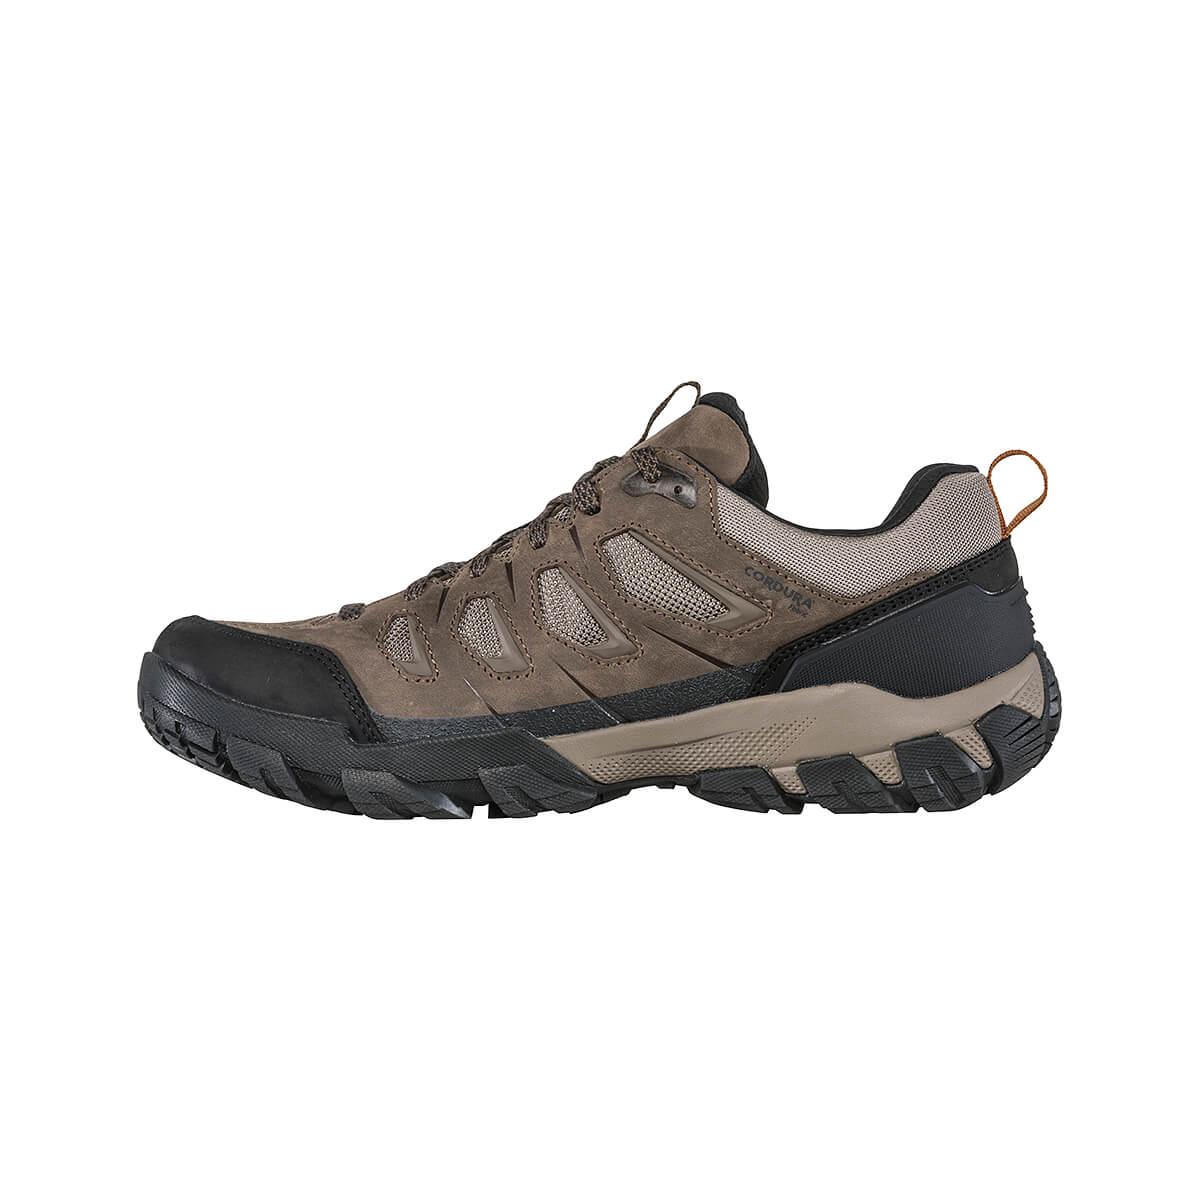 Men's Sawtooth X Low Waterproof Hiking Shoes